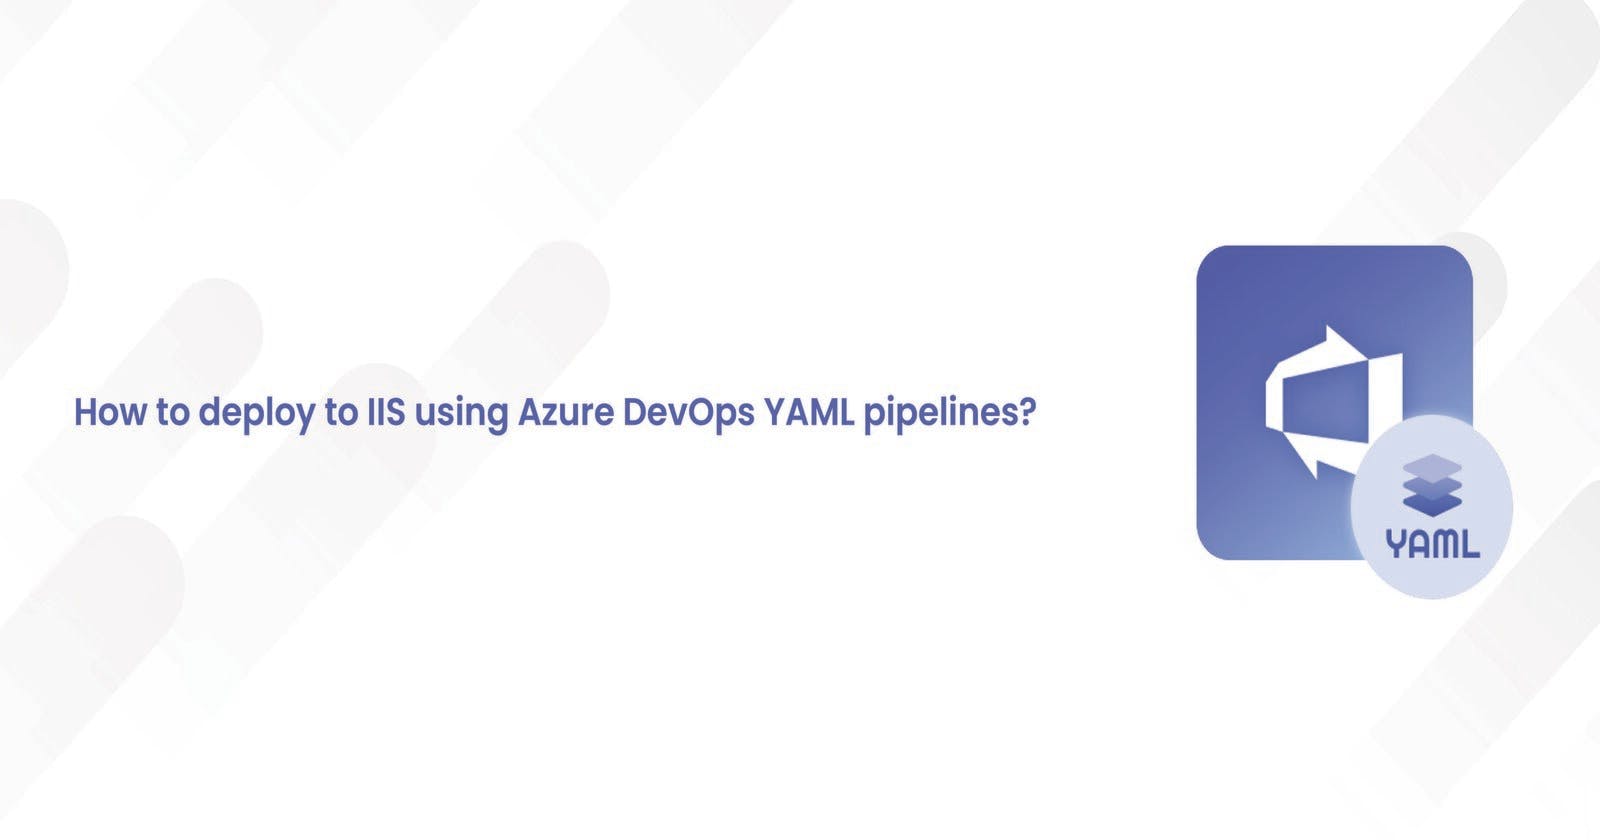 How to deploy to IIS using Azure DevOps YAML pipelines?